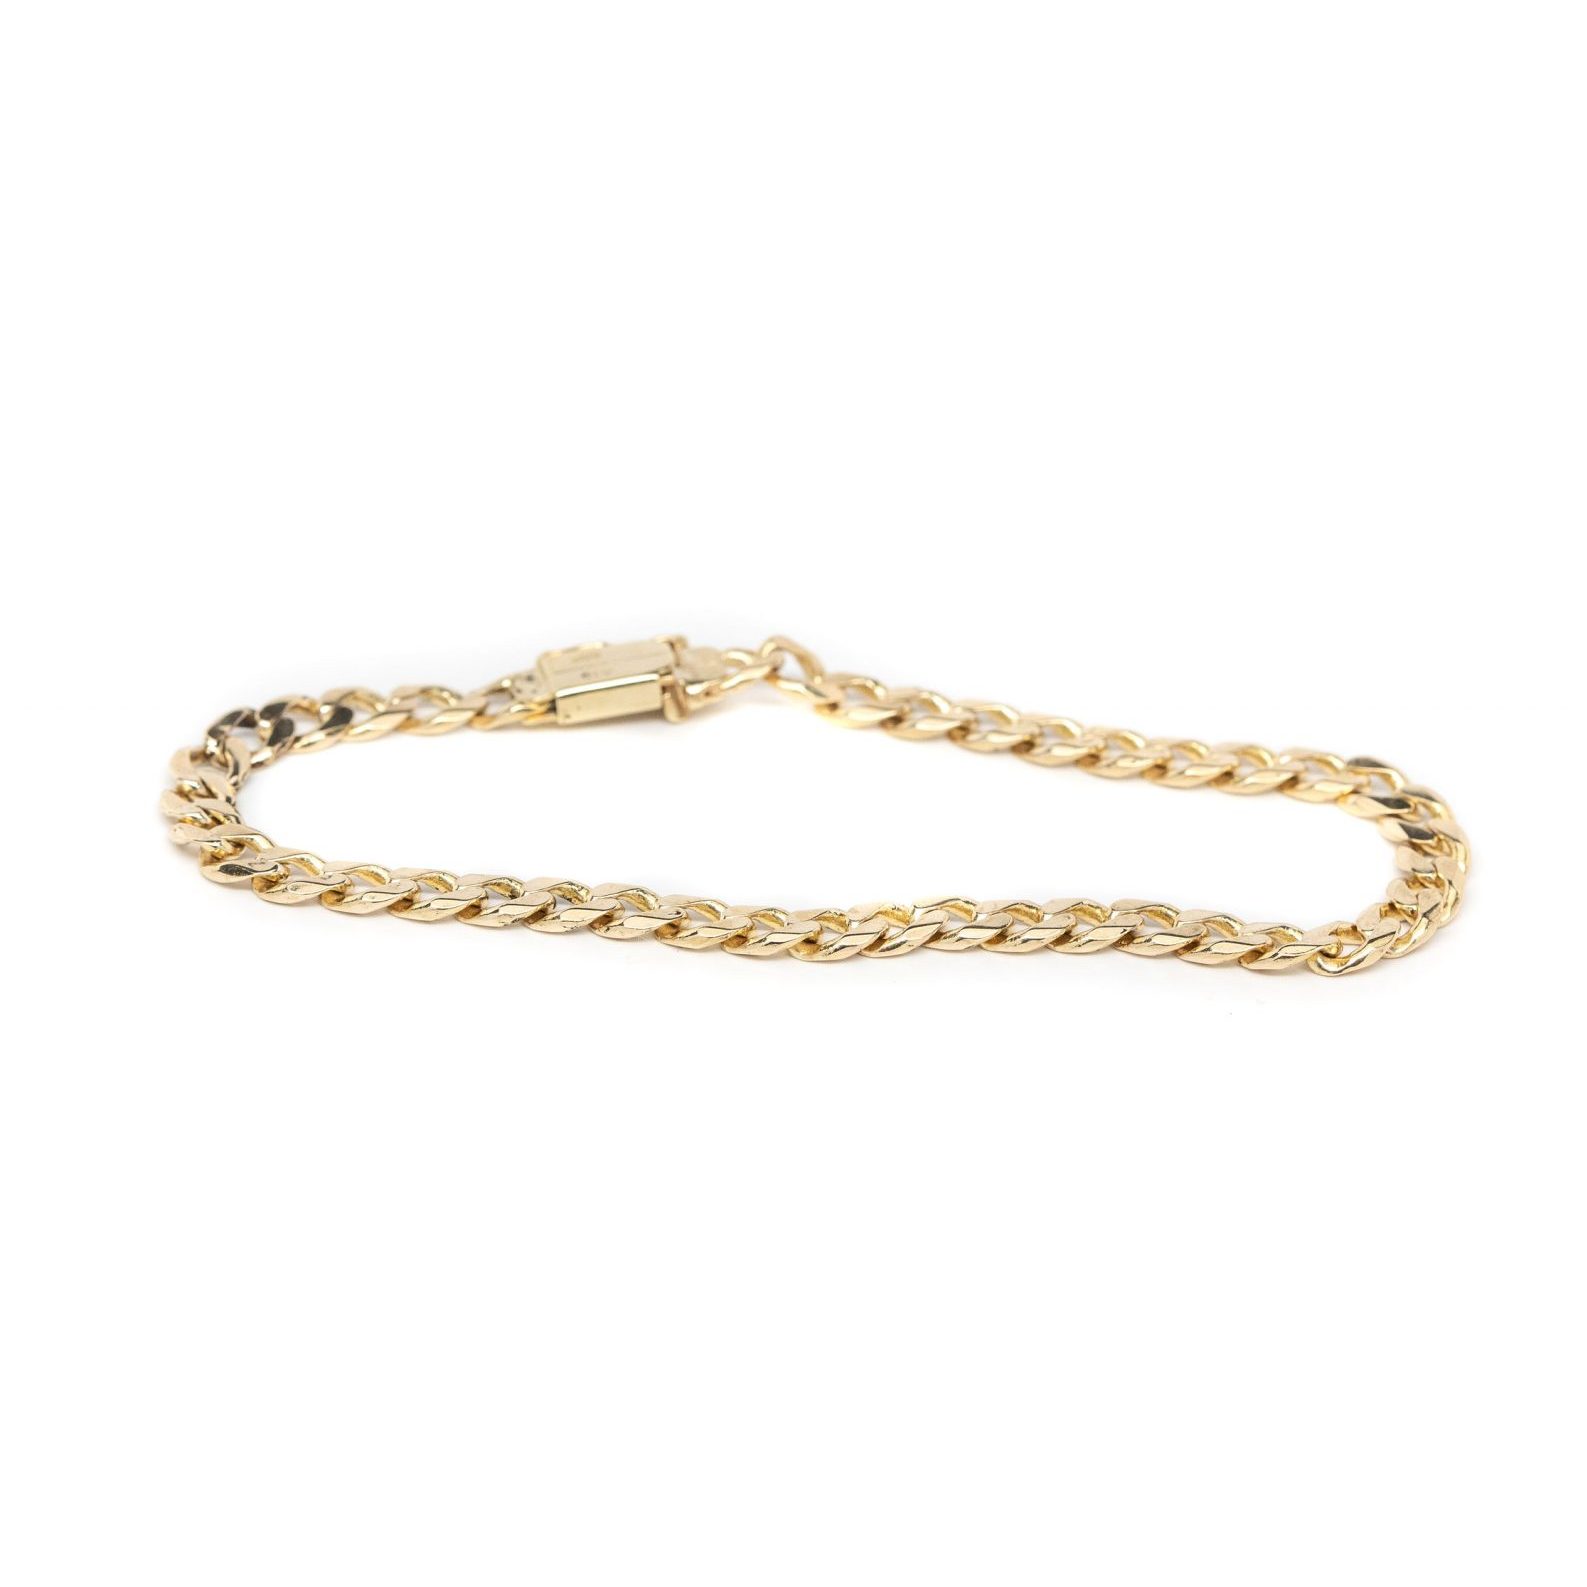 Miriams Jewelry Estate Link Gold Bracelet - Miriams Jewelry